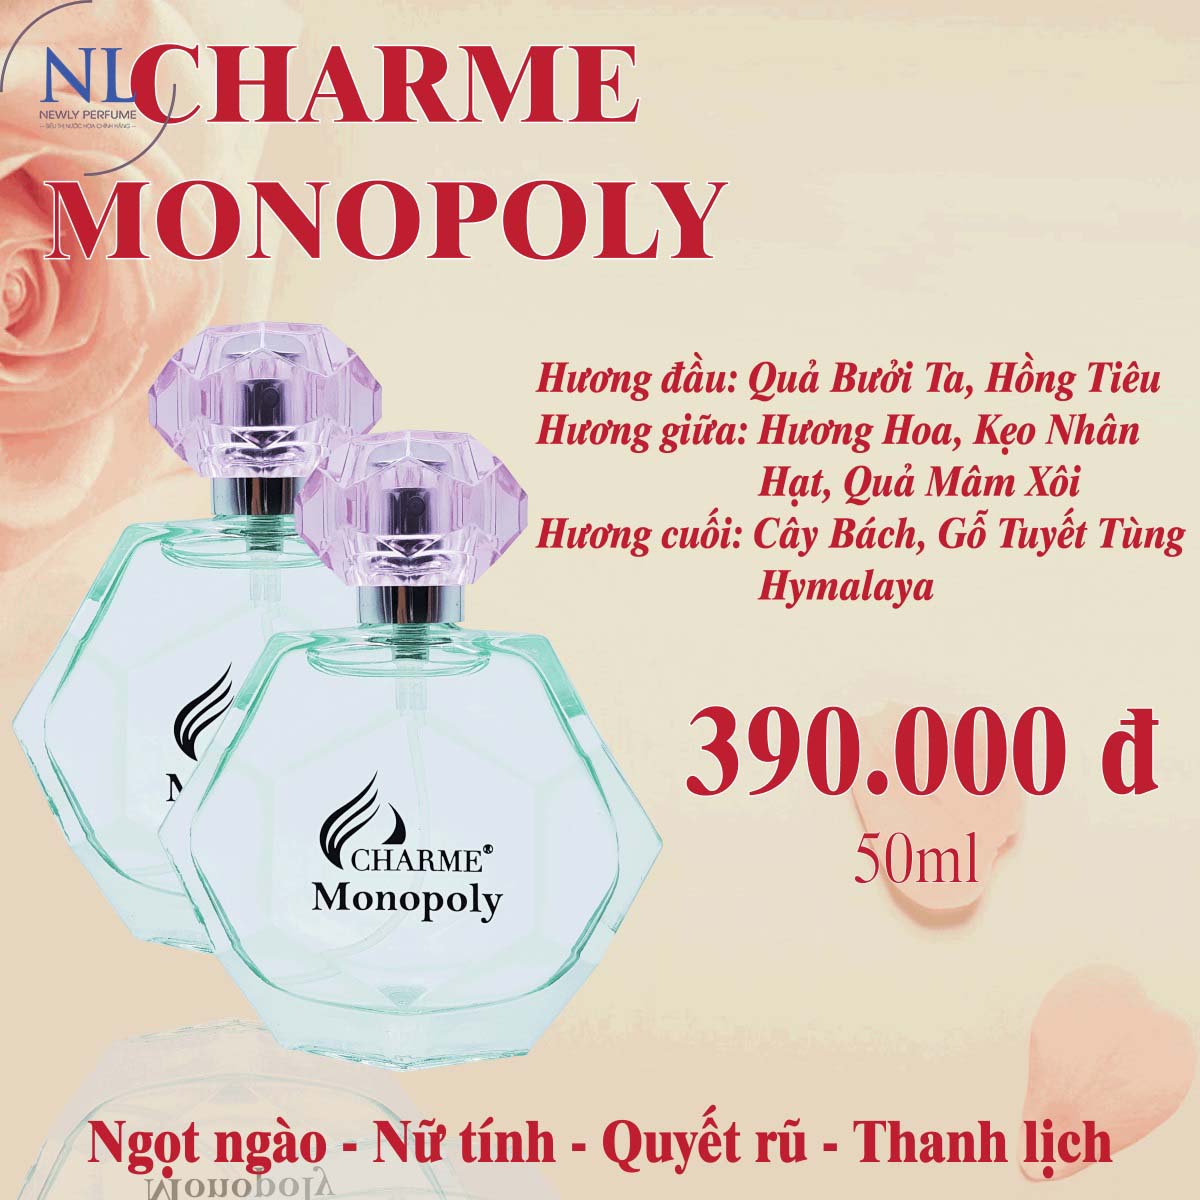 nước hoa charme monopoly 50ml